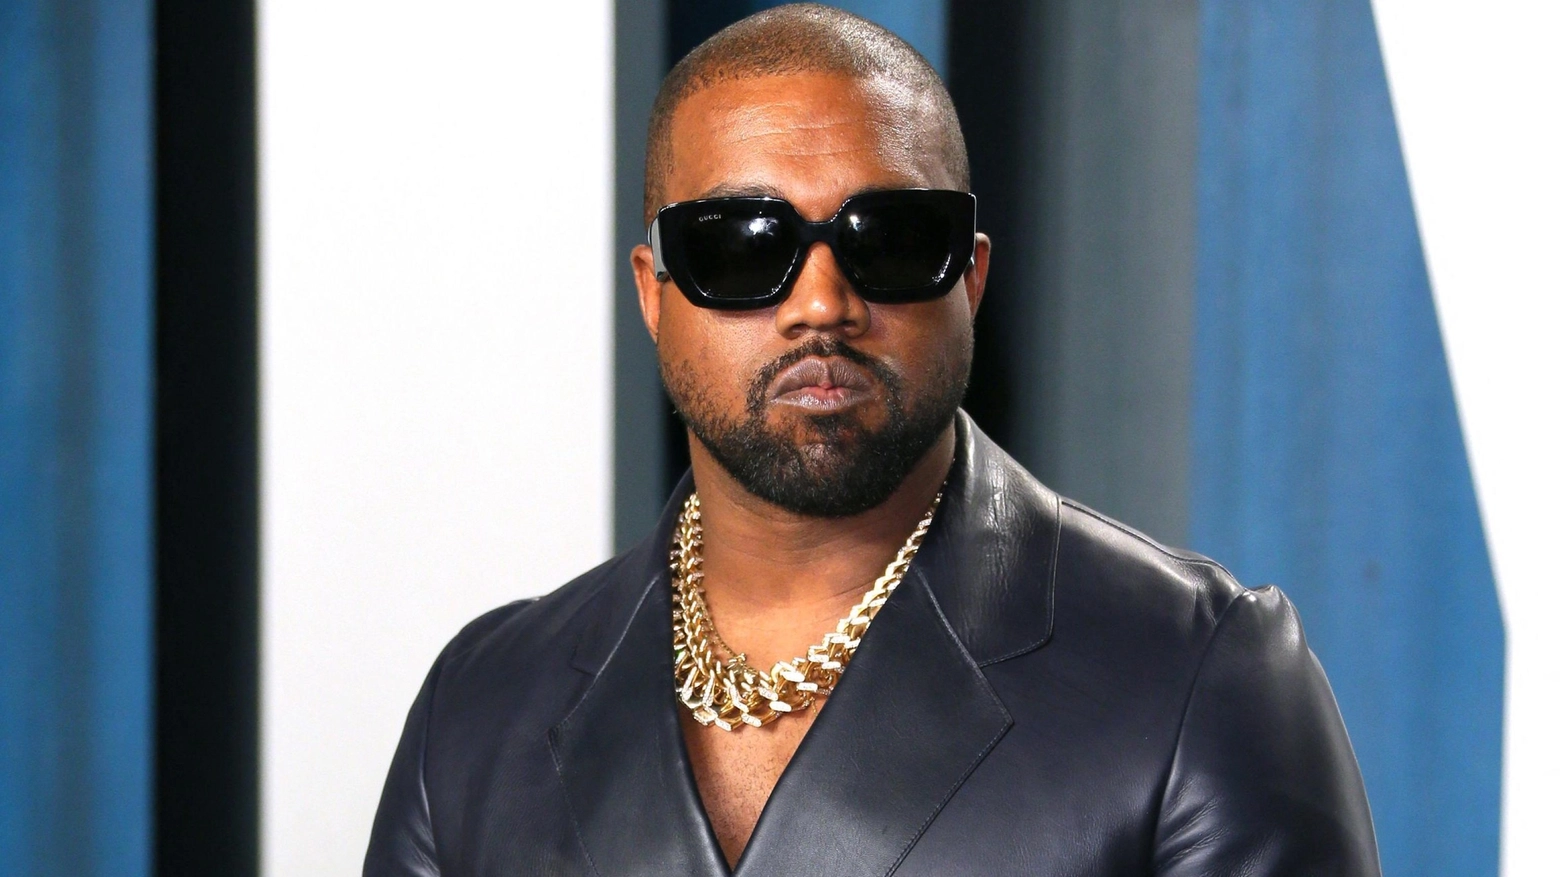 Il rapper americano Kanye West